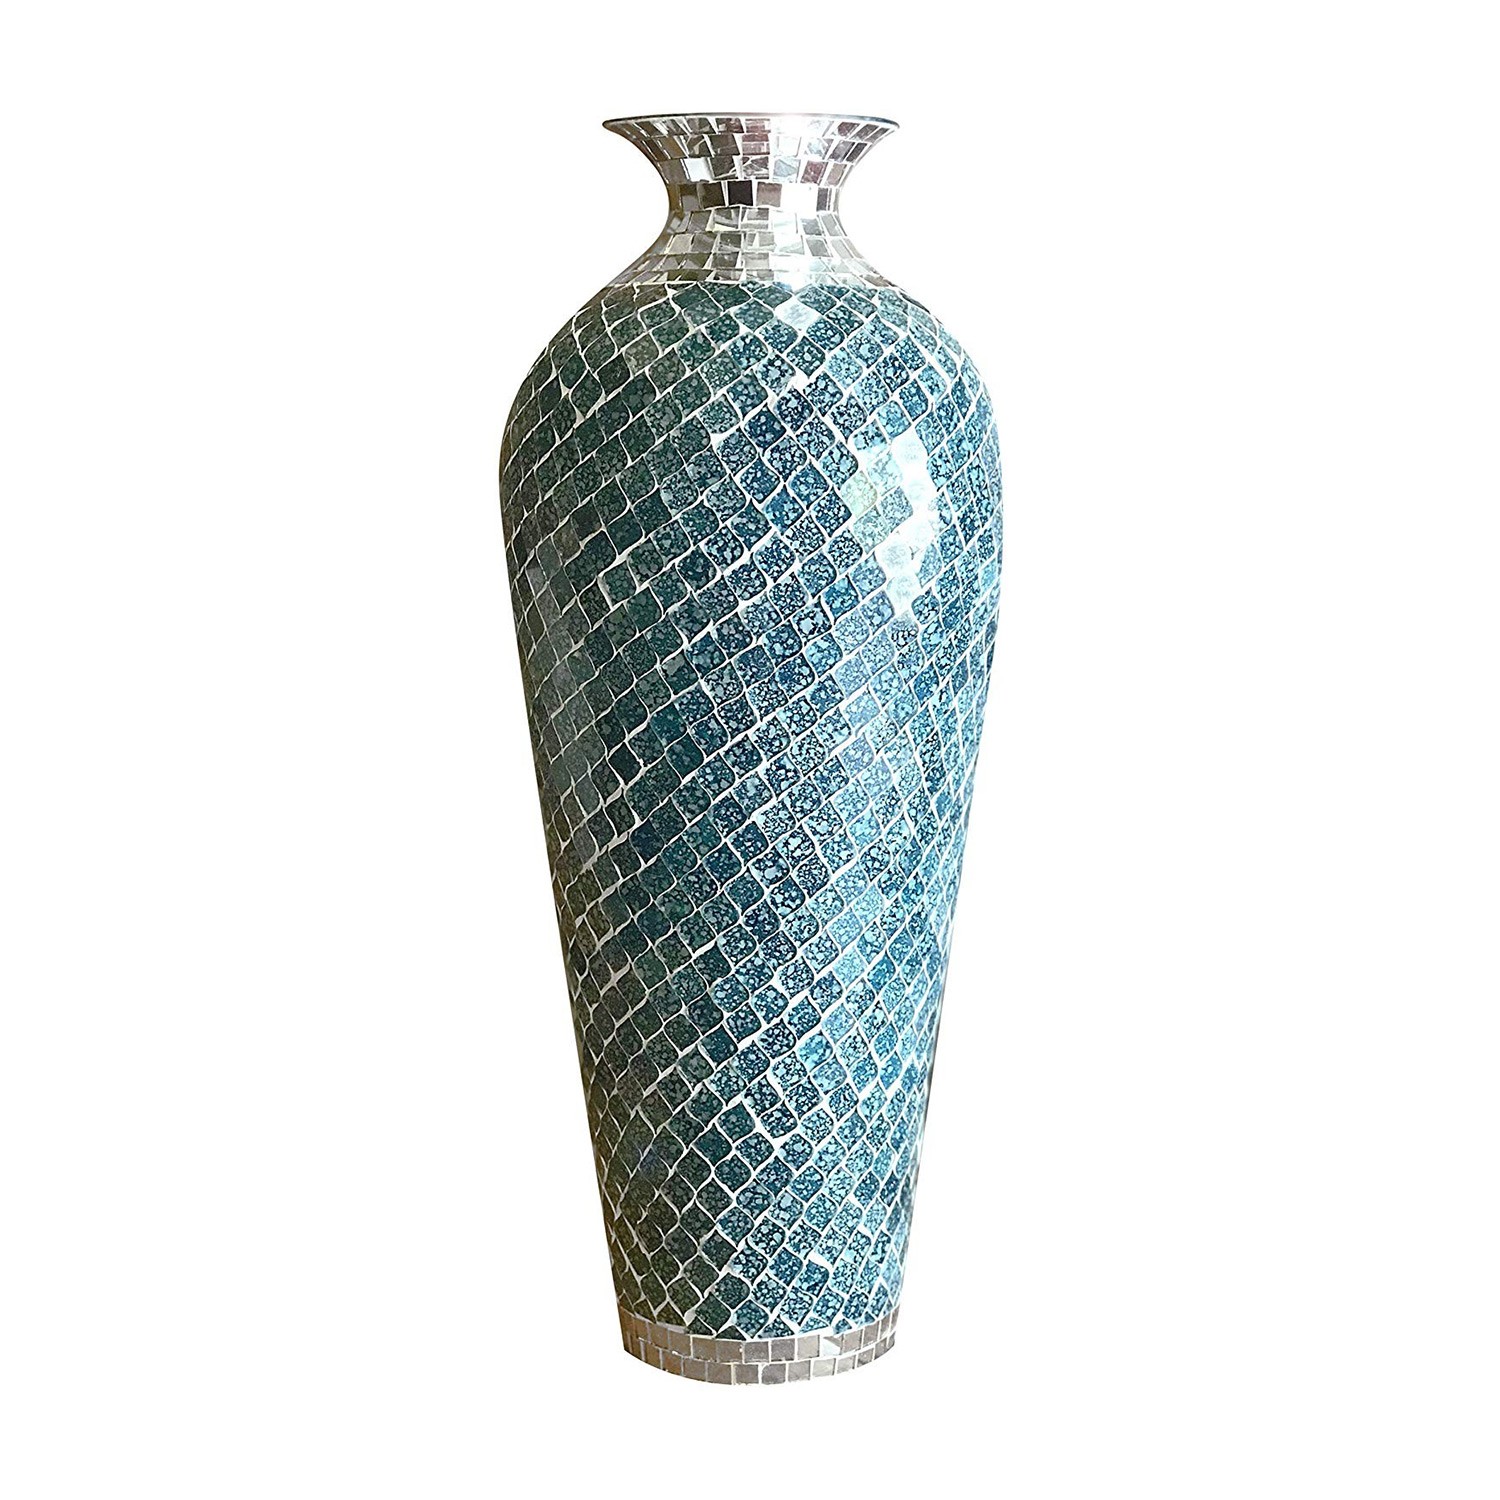 https://www.decorshore.com/1998/decorshore-decorative-glass-mosaic-vase-tall-home-decor-geometric-pattern-metal-floor-vase-teal-silver.jpg